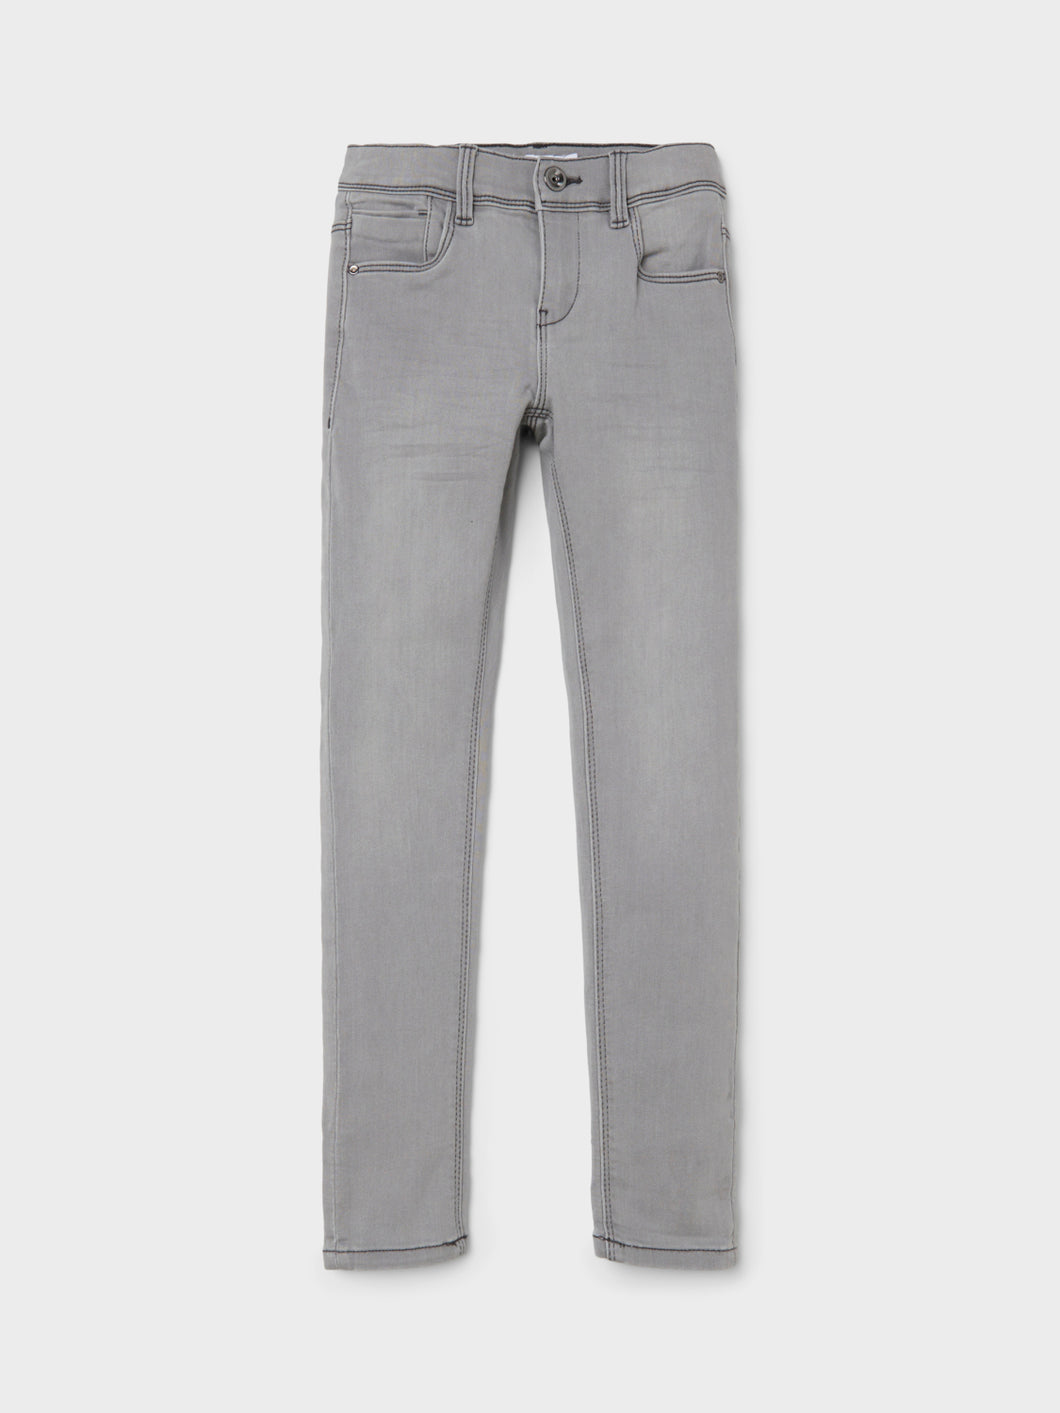 NKFPOLLY Jeans - Medium Grey Denim